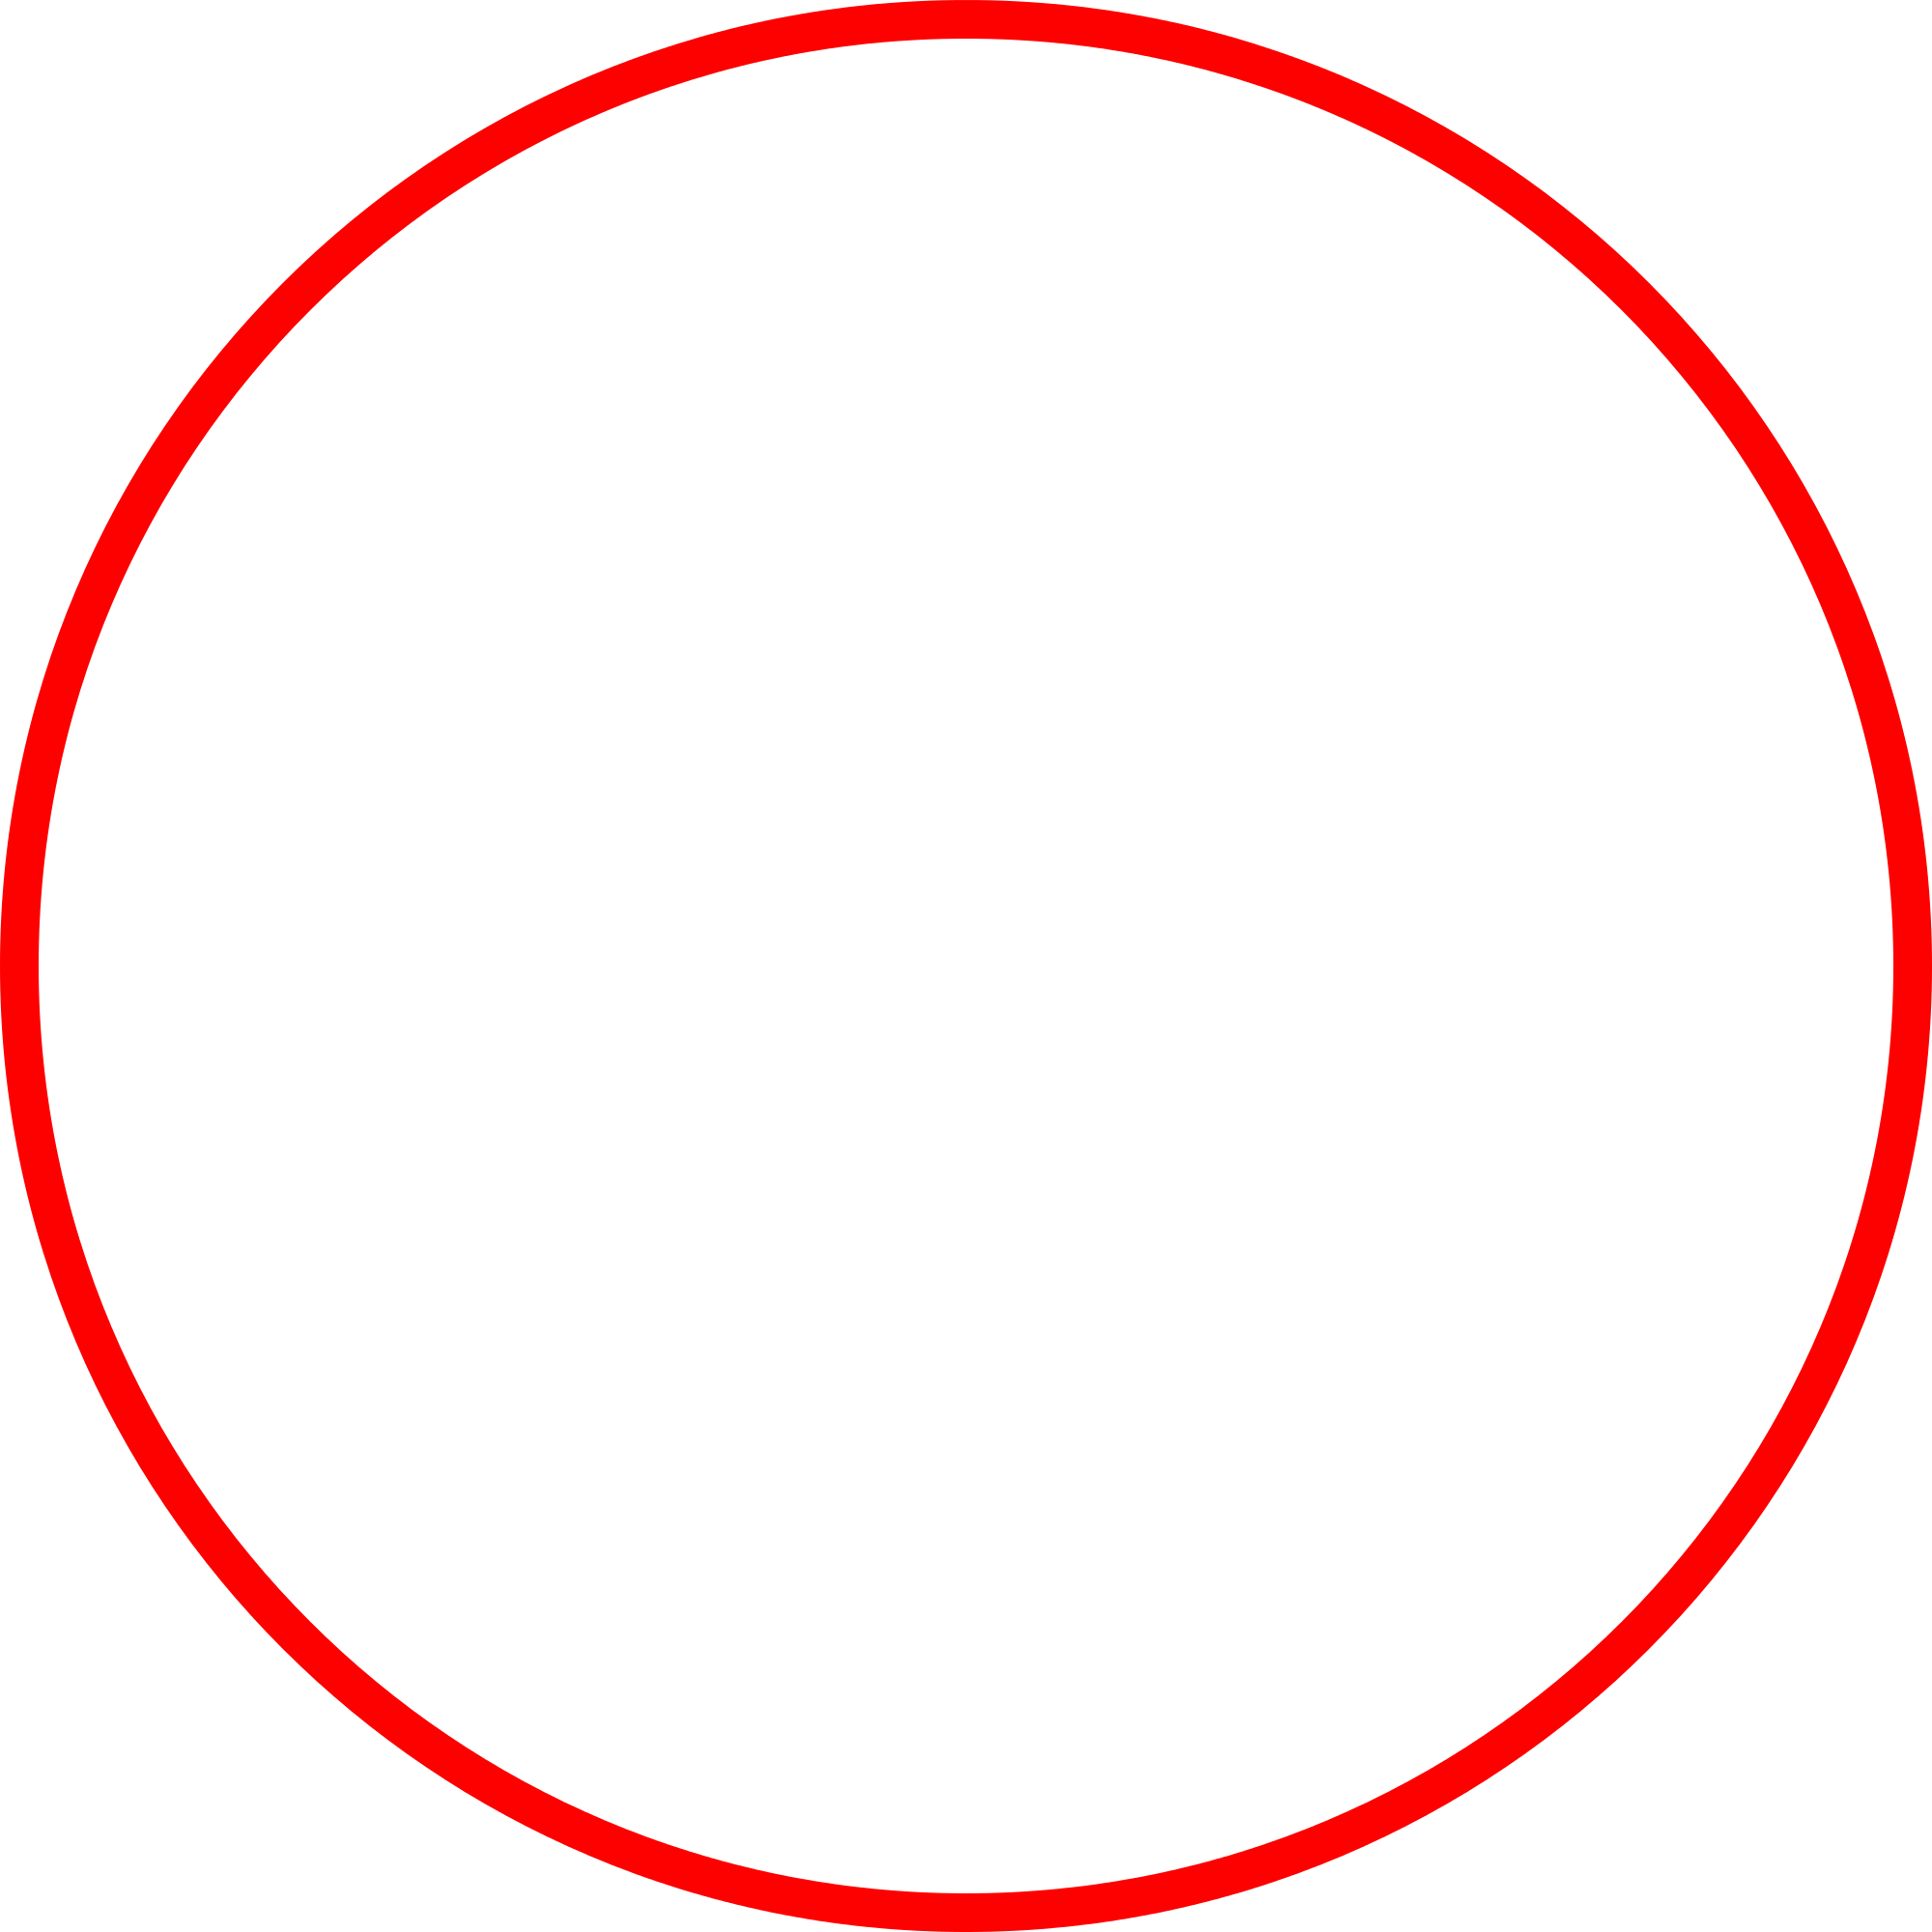 Circle l. Круг. Прозрачный круг. Круг без фона. Круг на прозрачном фоне.